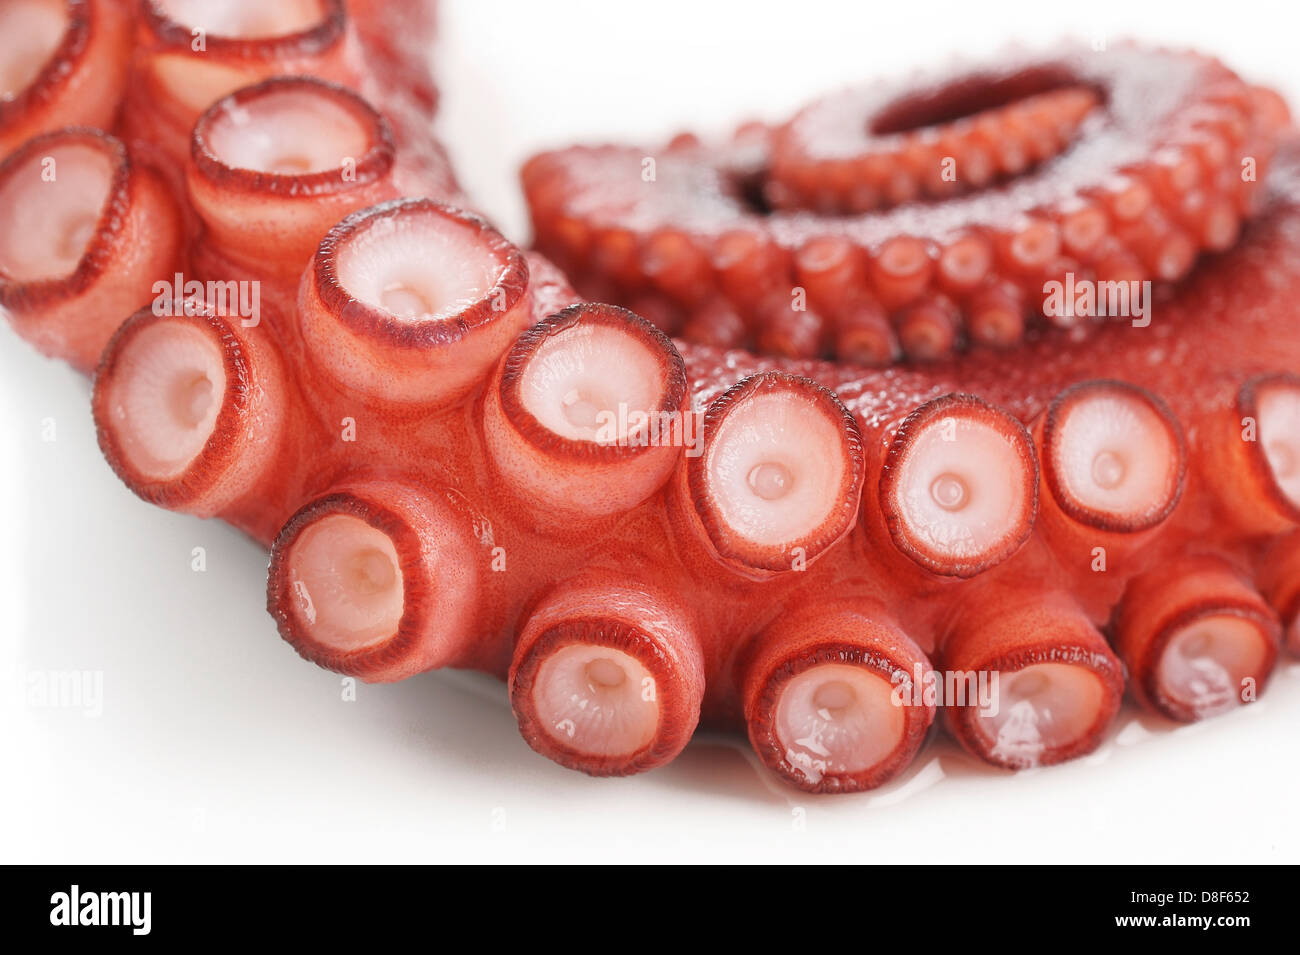 octopus - tentacle Stock Photo